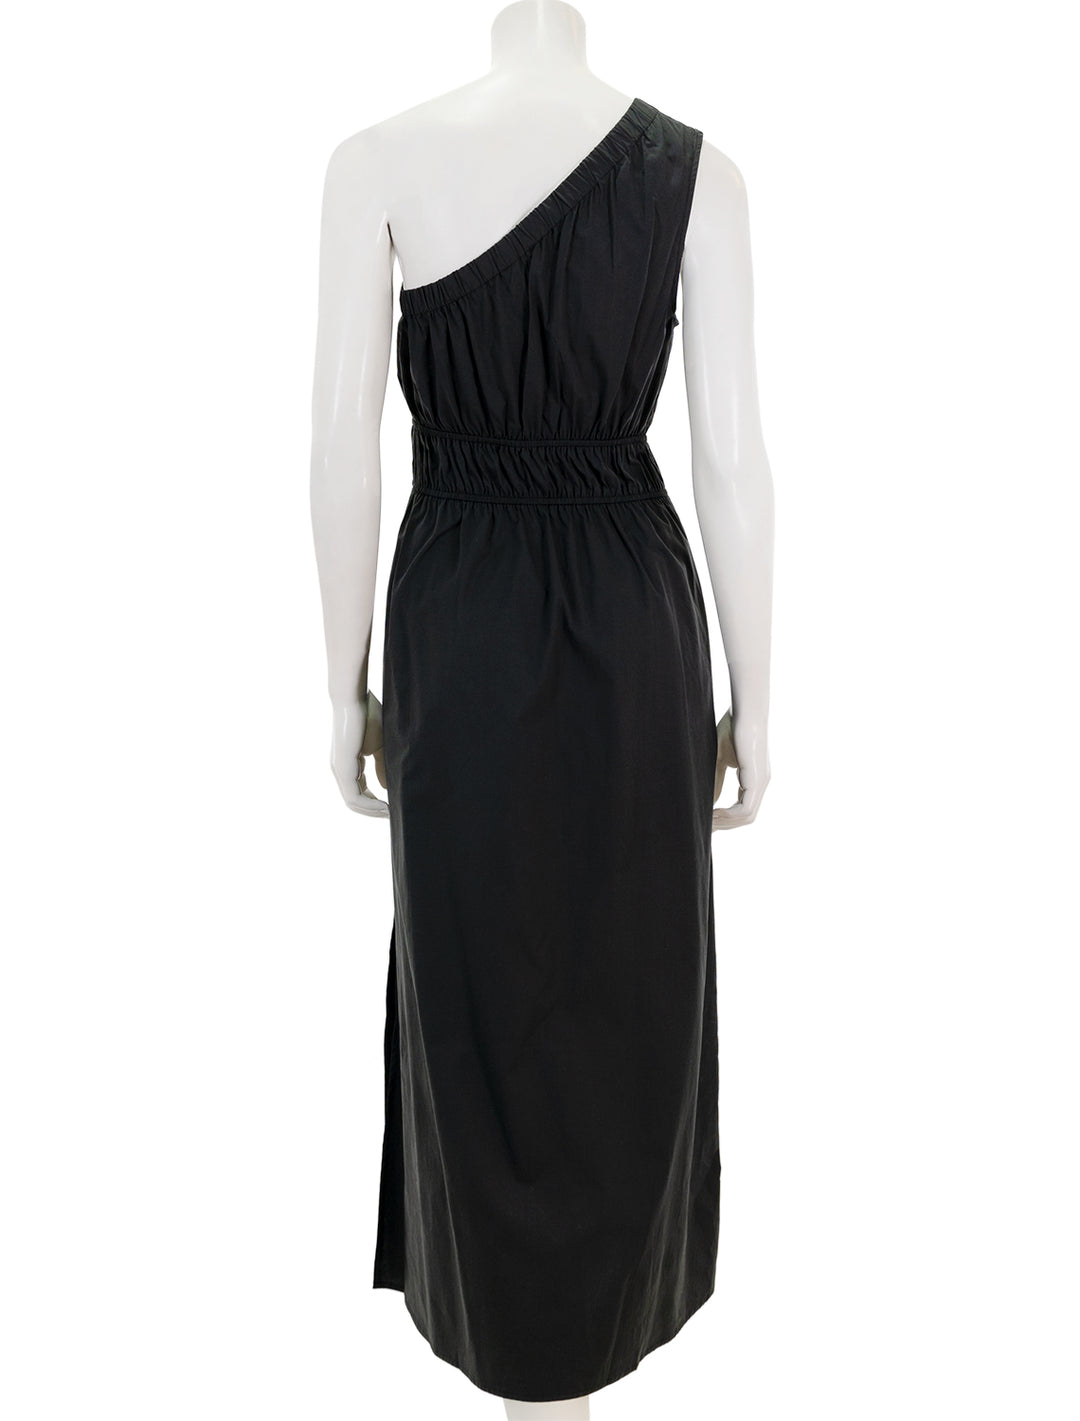 Back view of Rails' selani dress in black.